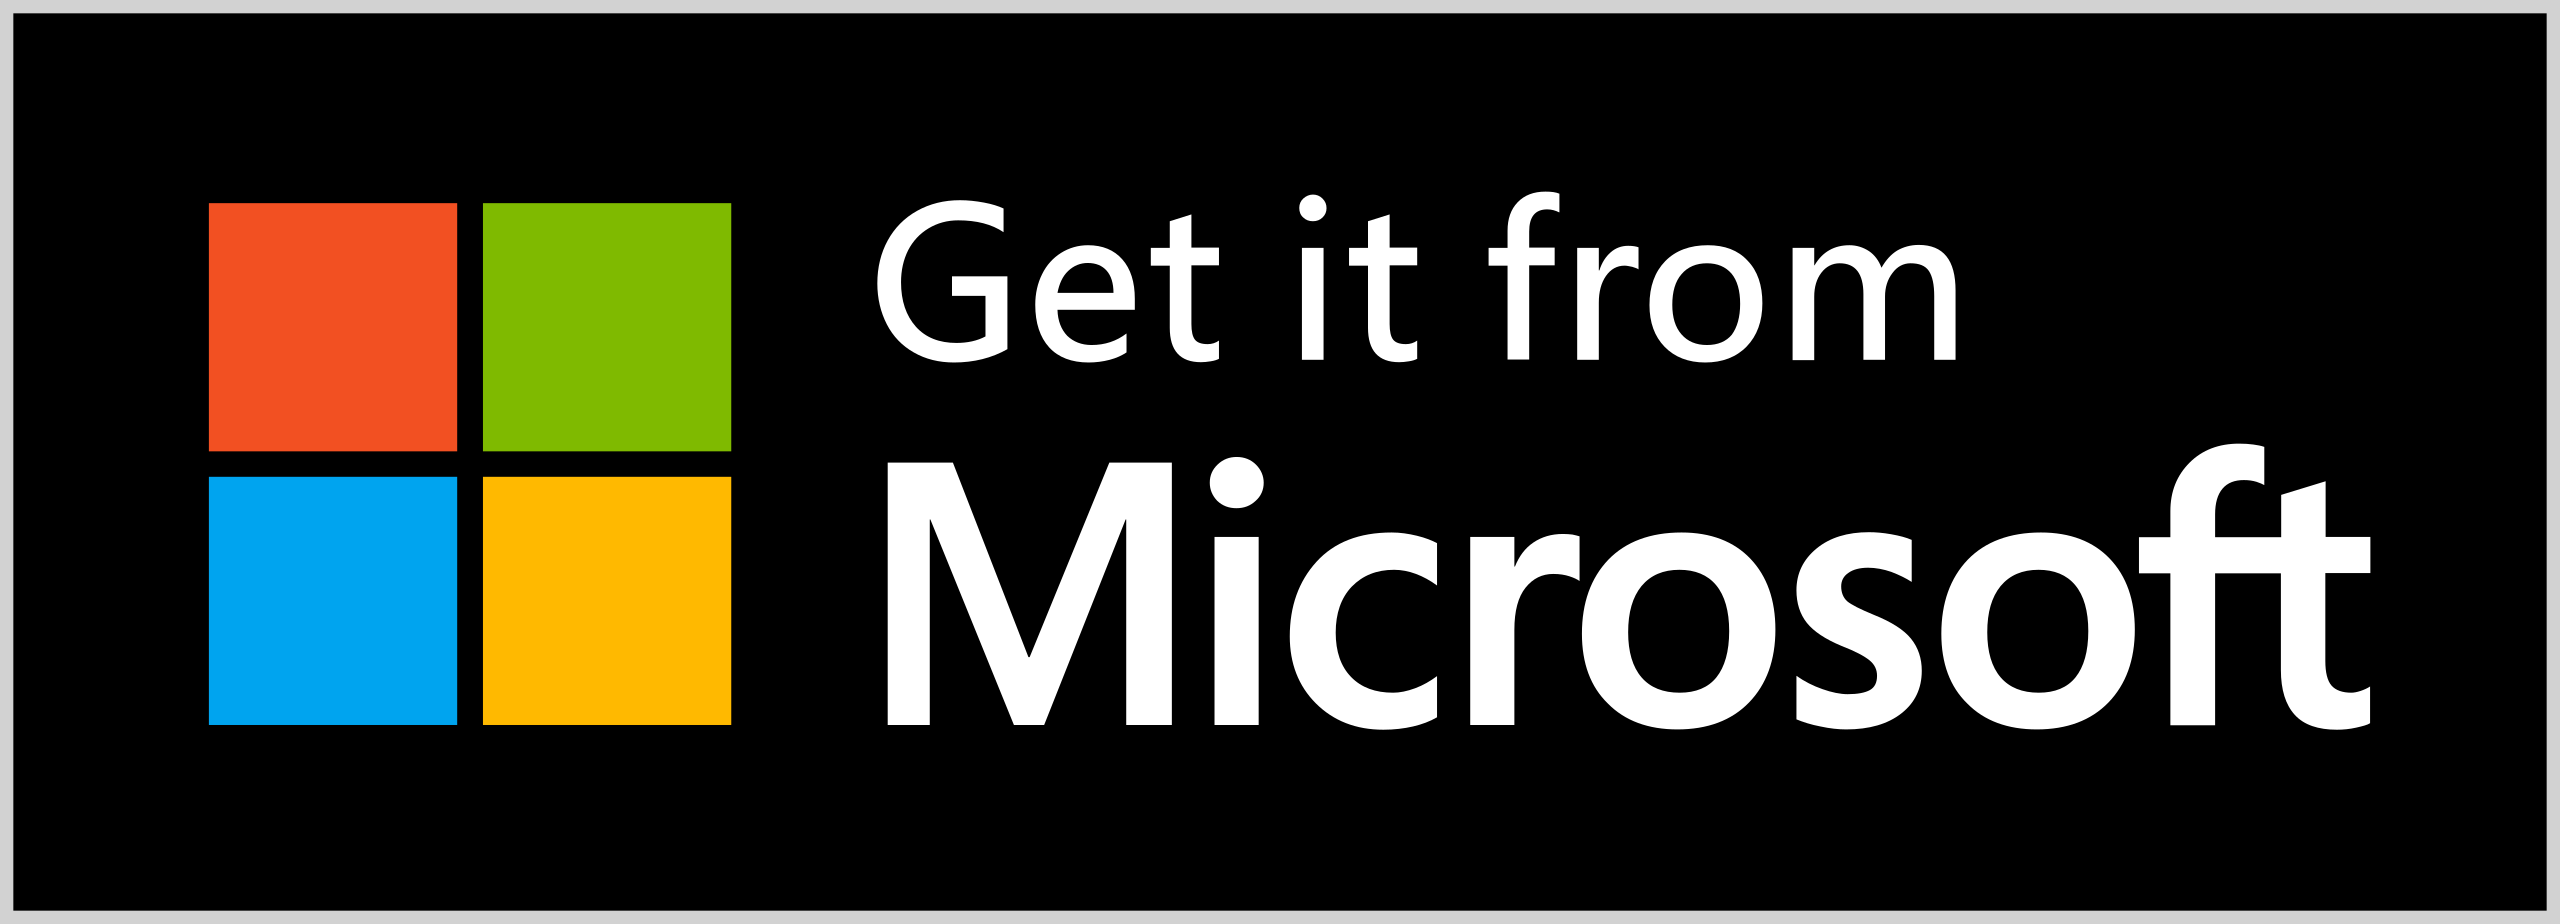 Get DigDig.io - Microsoft Store en-MS